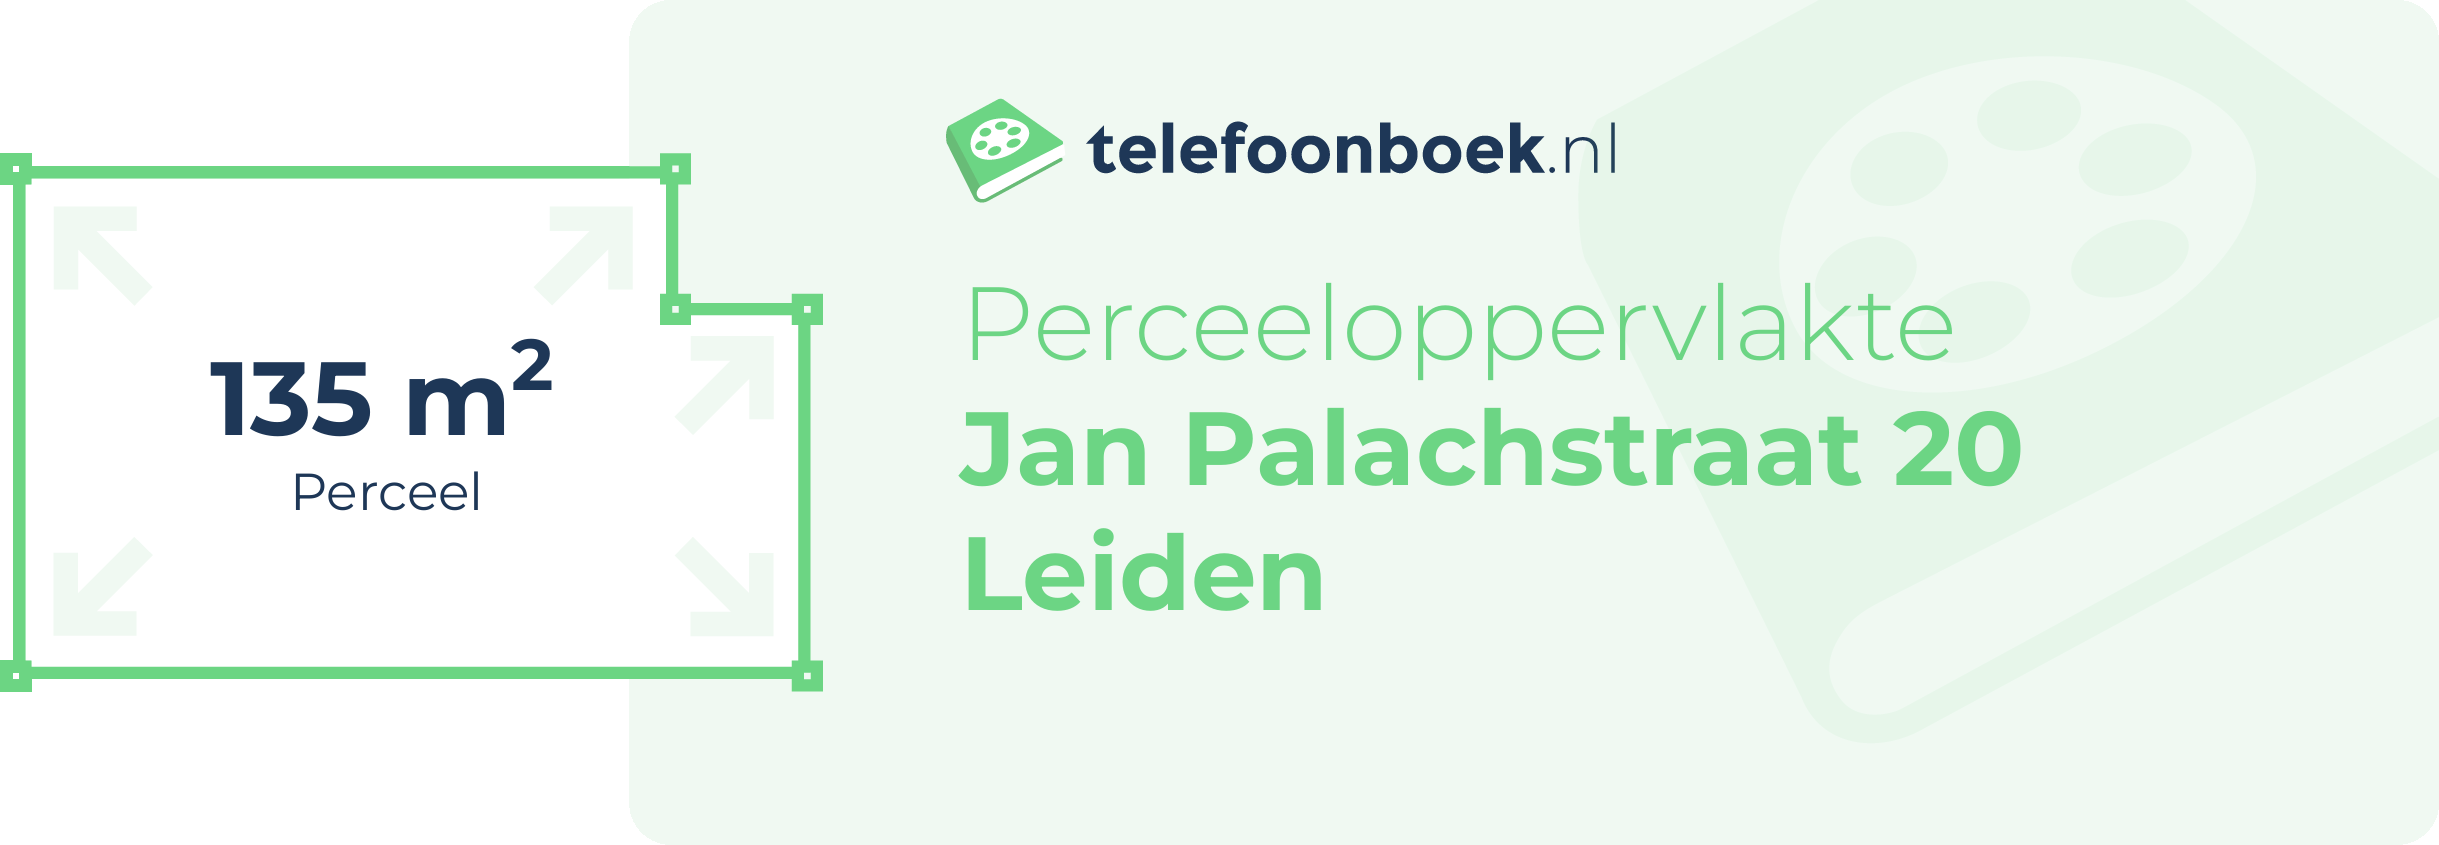 Perceeloppervlakte Jan Palachstraat 20 Leiden